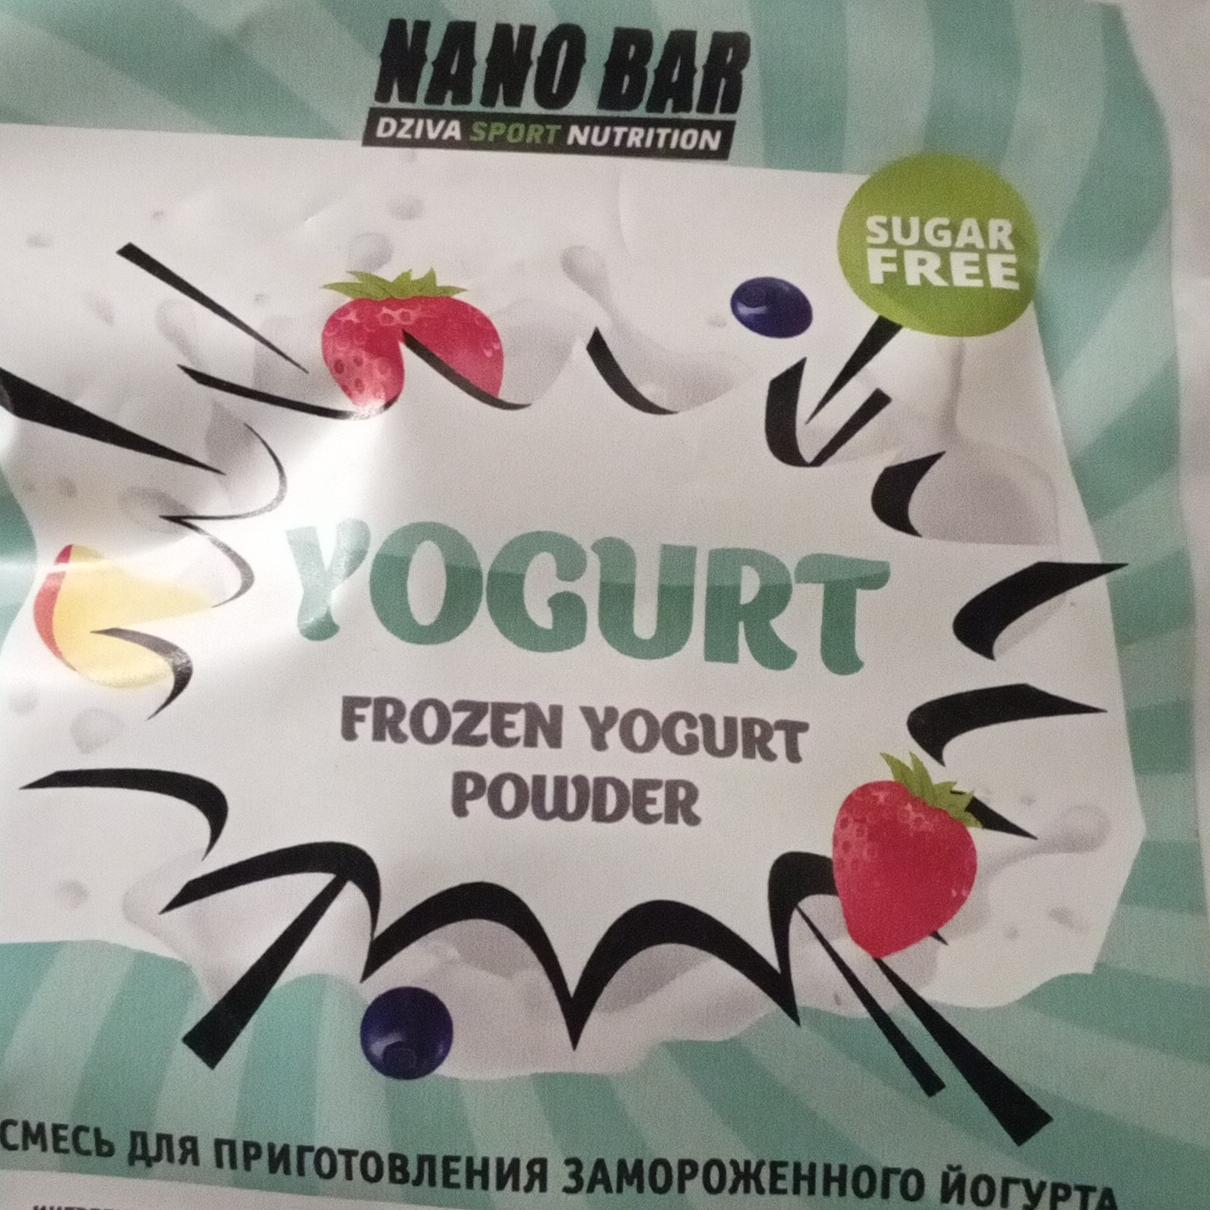 Фото - Йогуртовое мороженое Nano bar